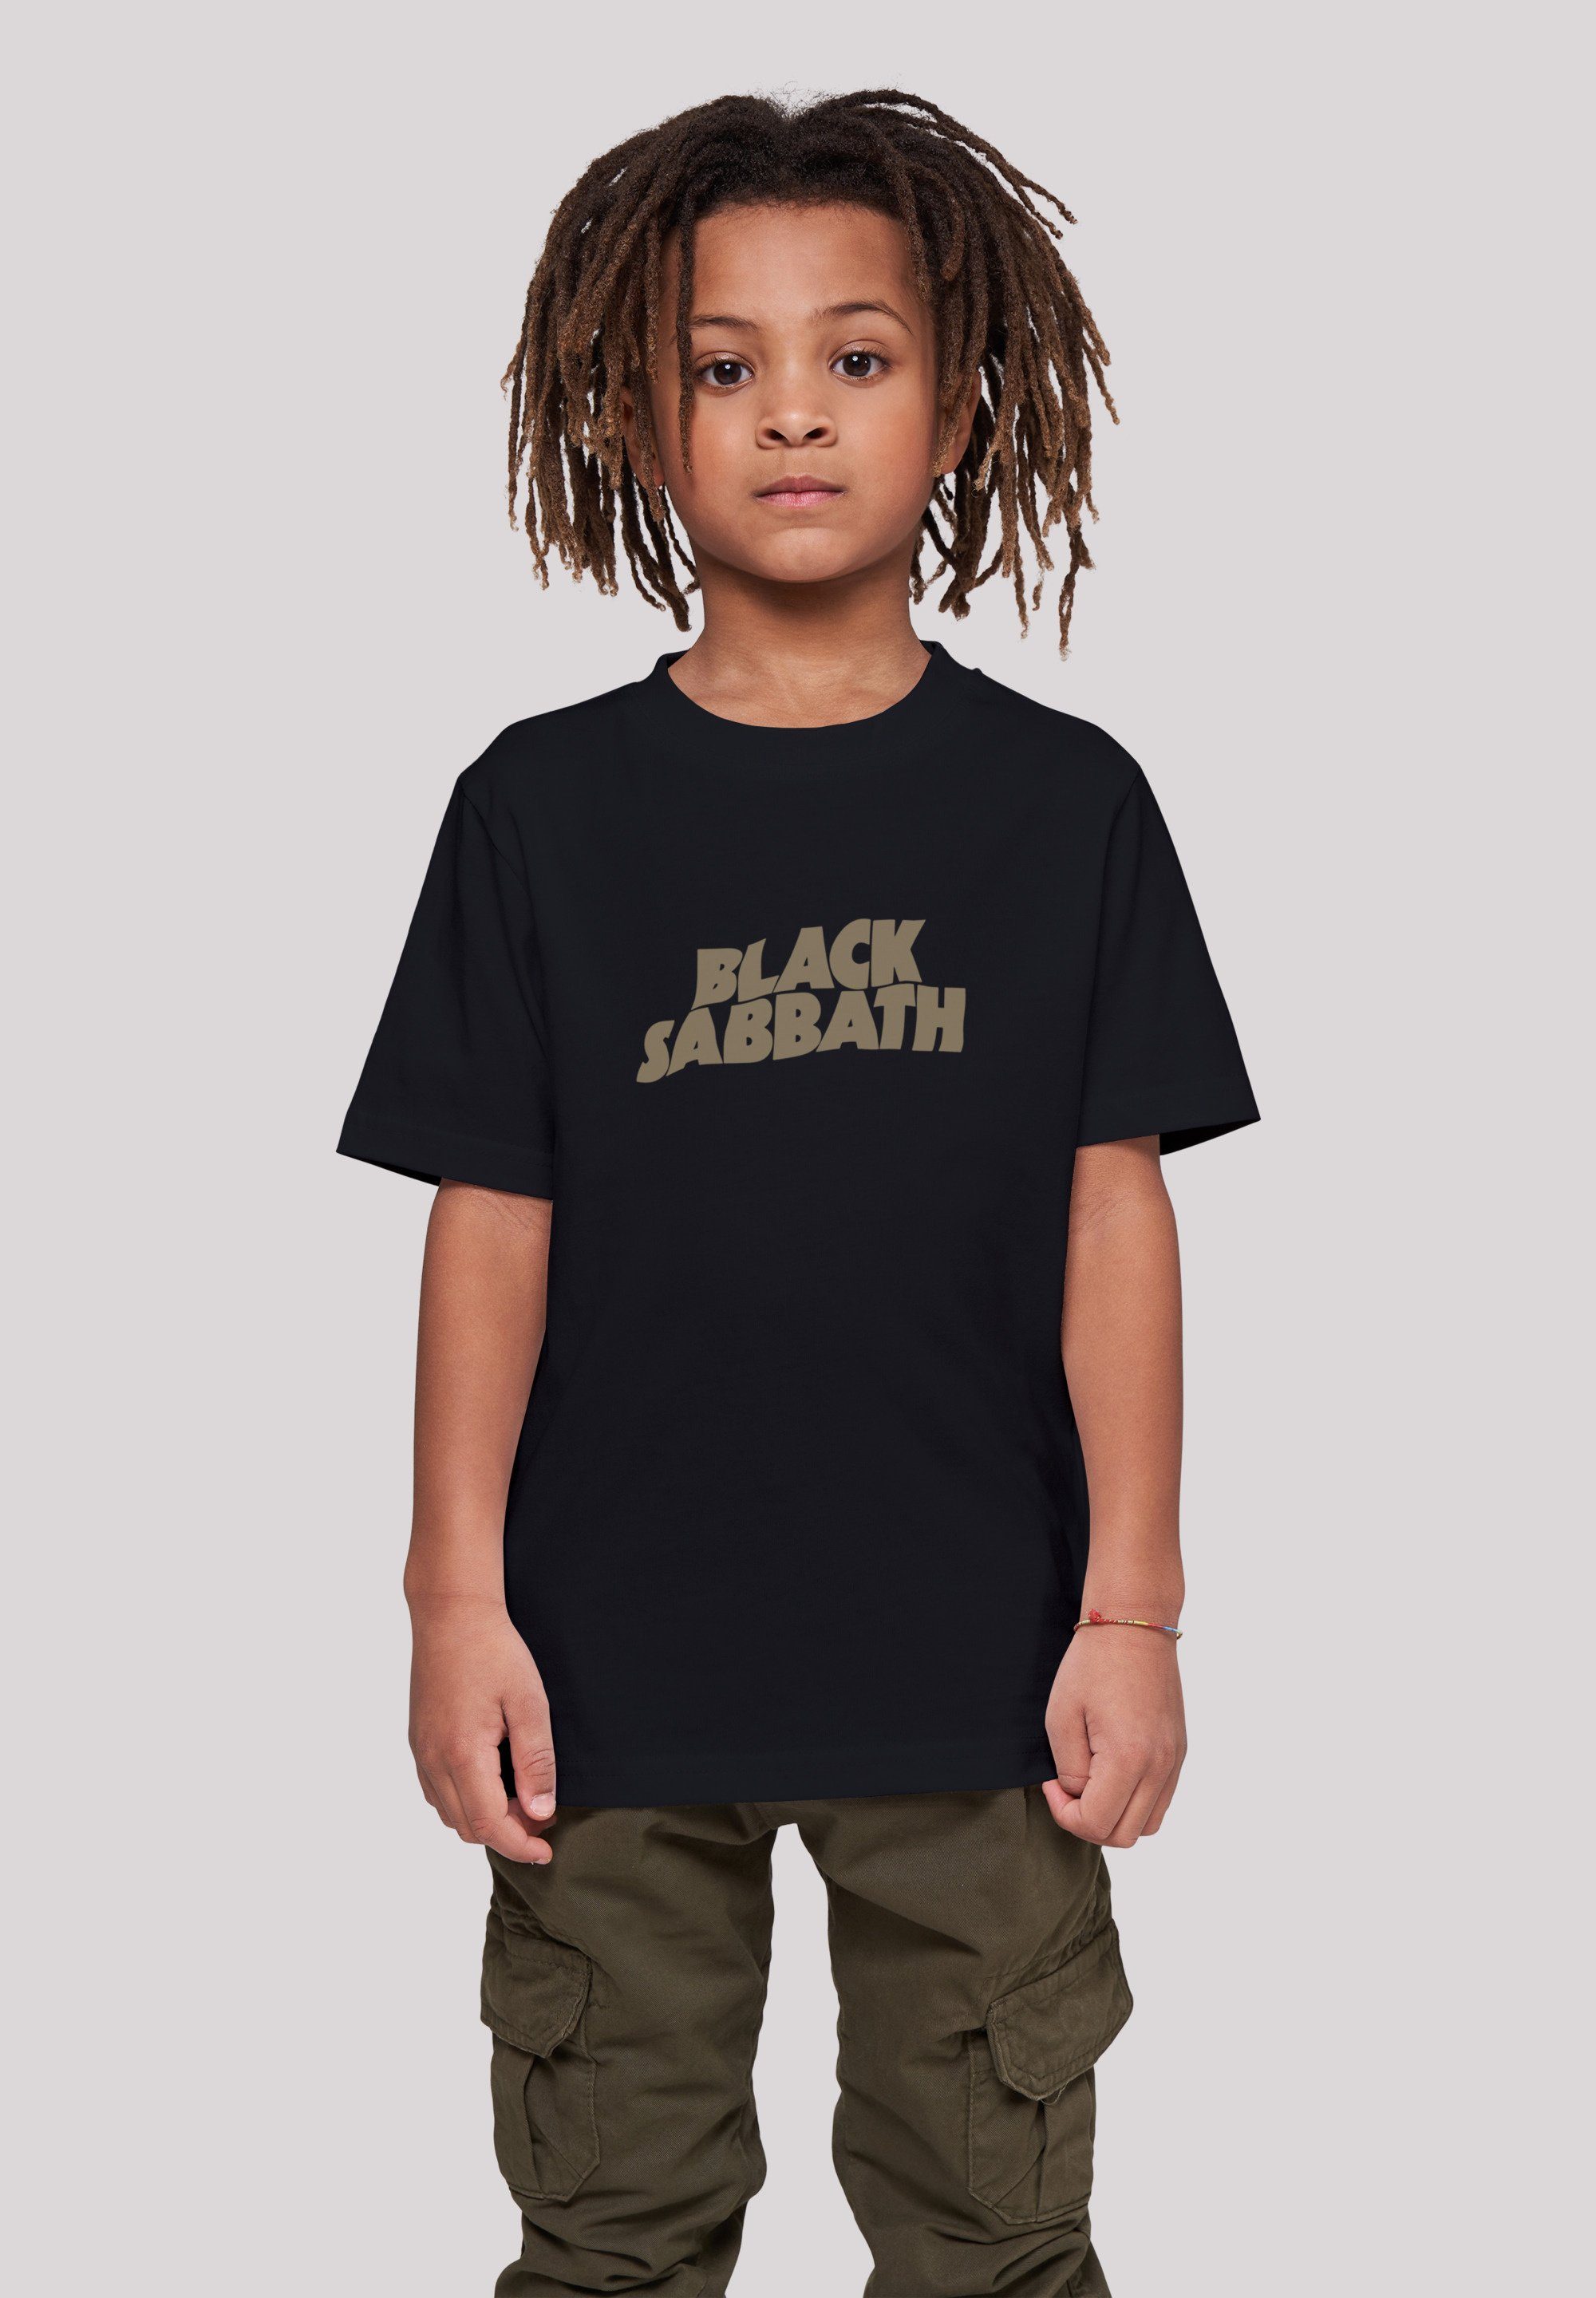 Print F4NT4STIC Band US Sabbath T-Shirt Zip Black Black Metal Tour 1978